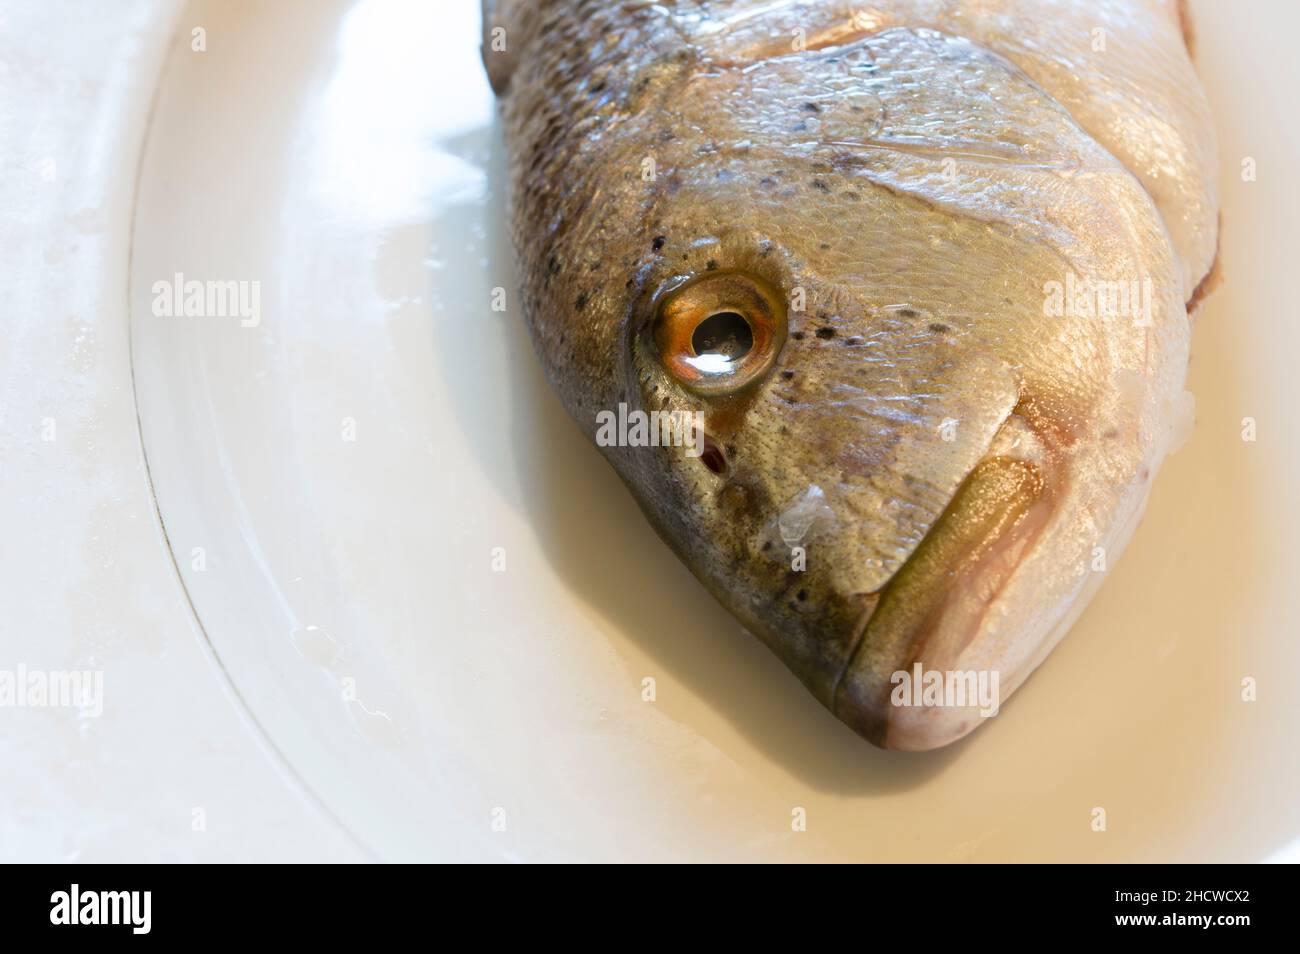 Head of raw saltwater fish Dentex Dentex, common dentex on a white plate, raw seafood from Adriatic sea, Dalmatian cuisine Stock Photo